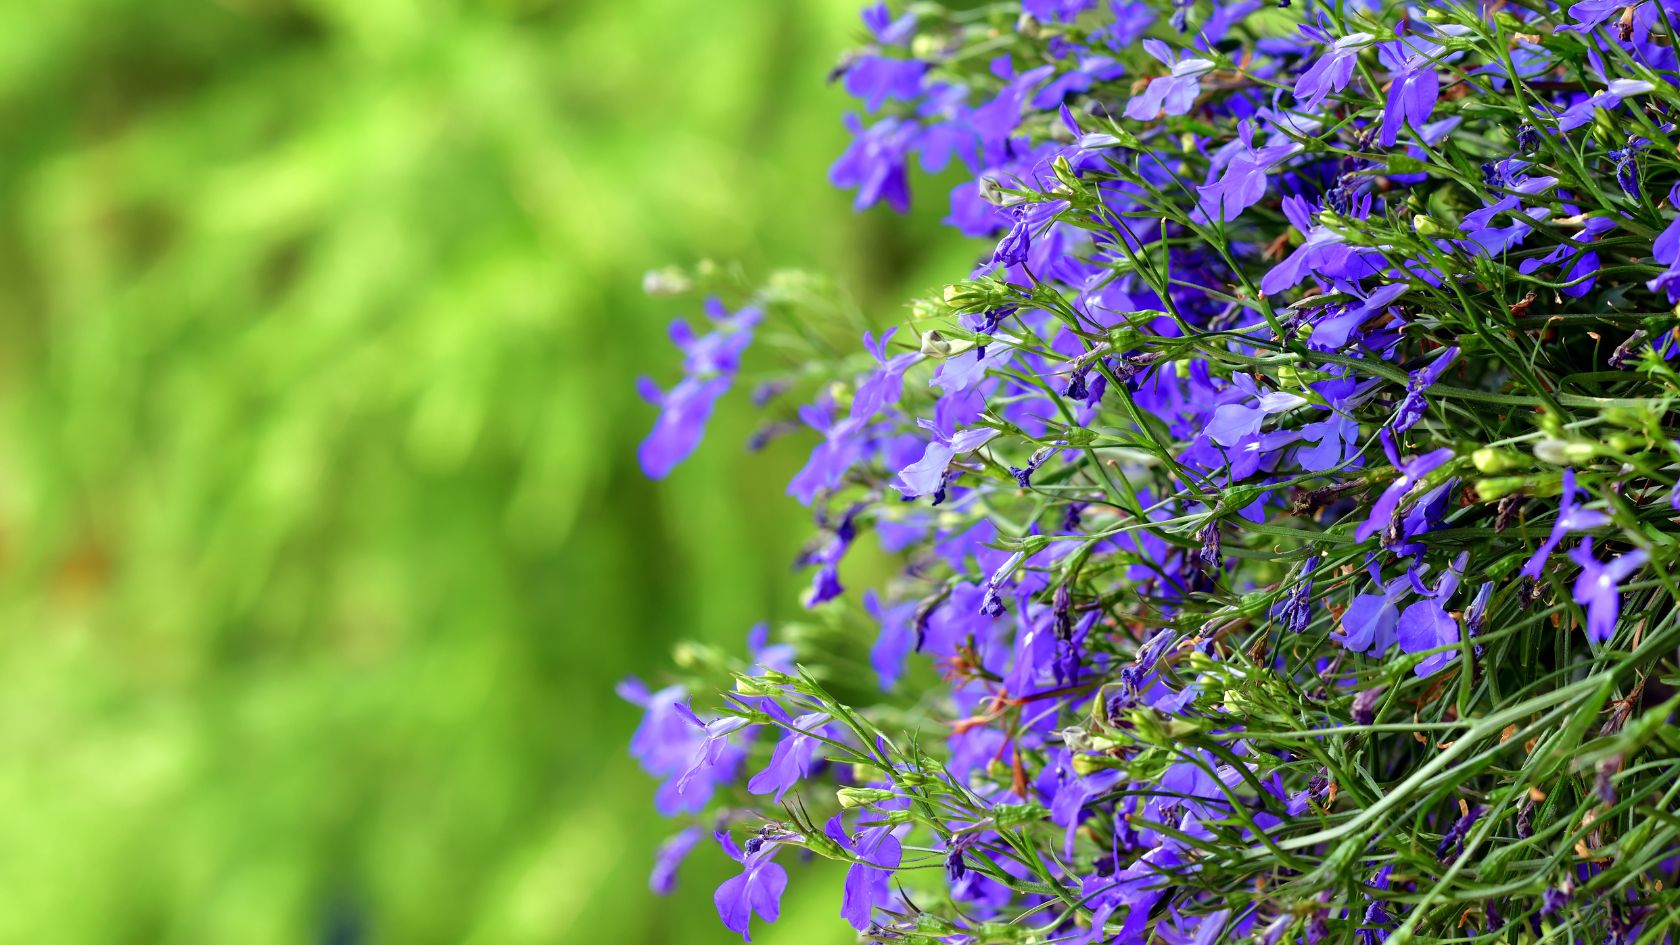 How to cultivate Beautiful Lobelia flowers